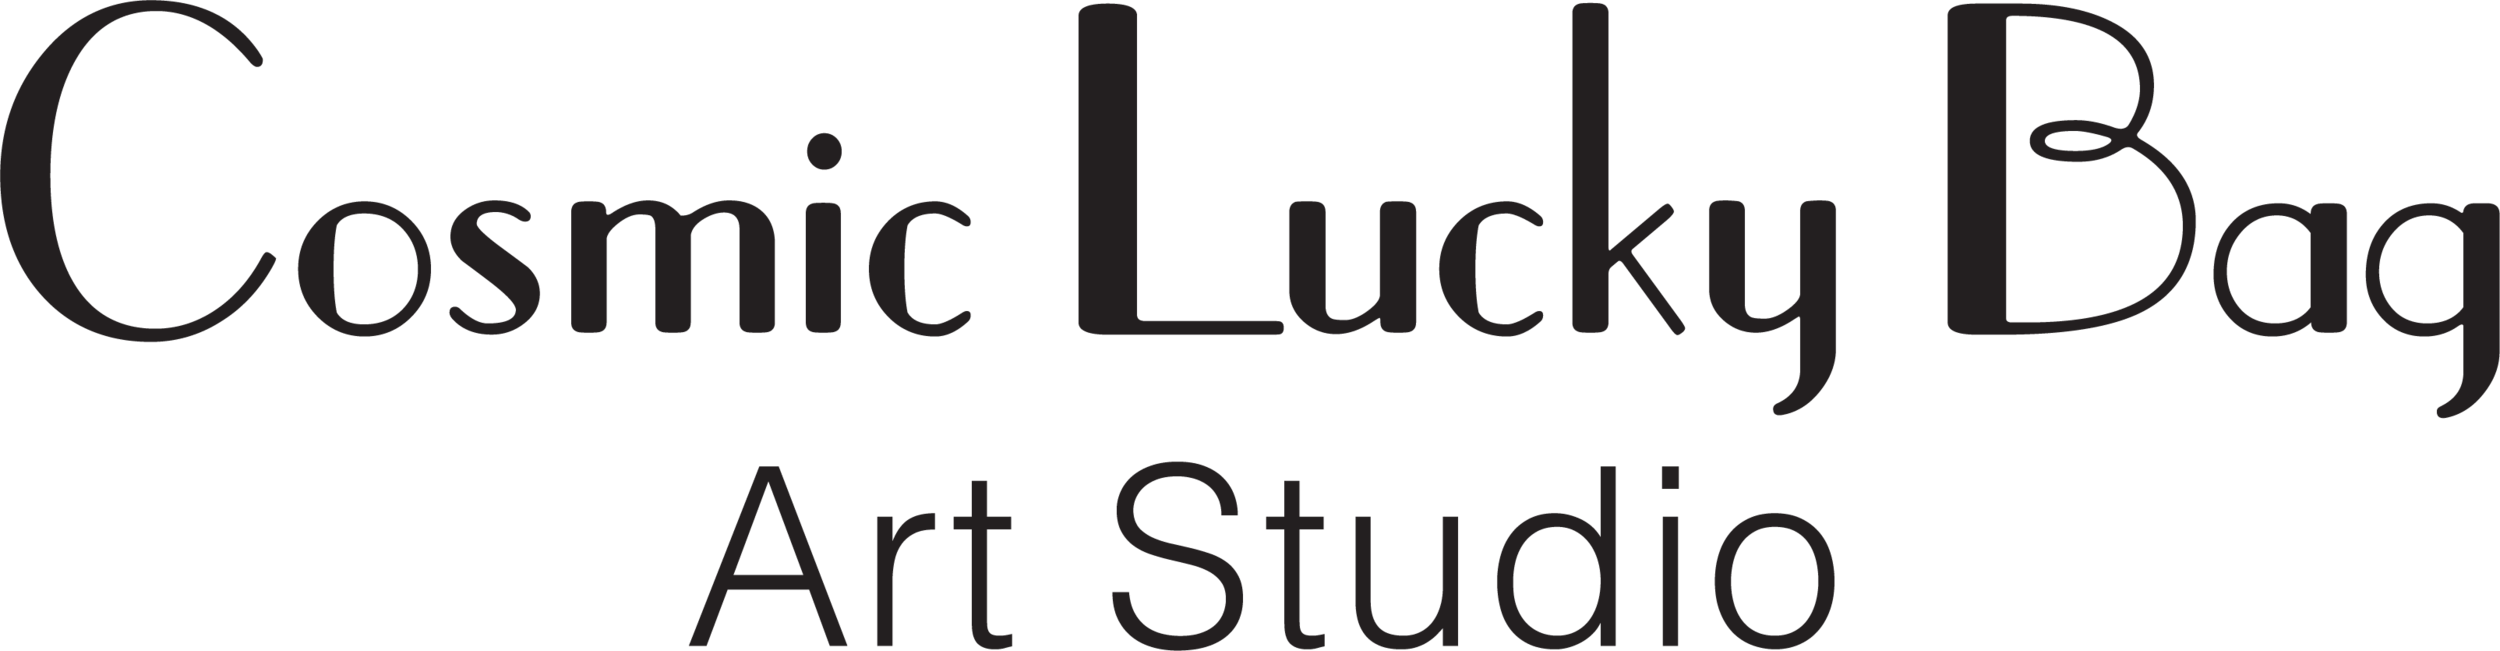 Cosmic Lucky Bag Logo